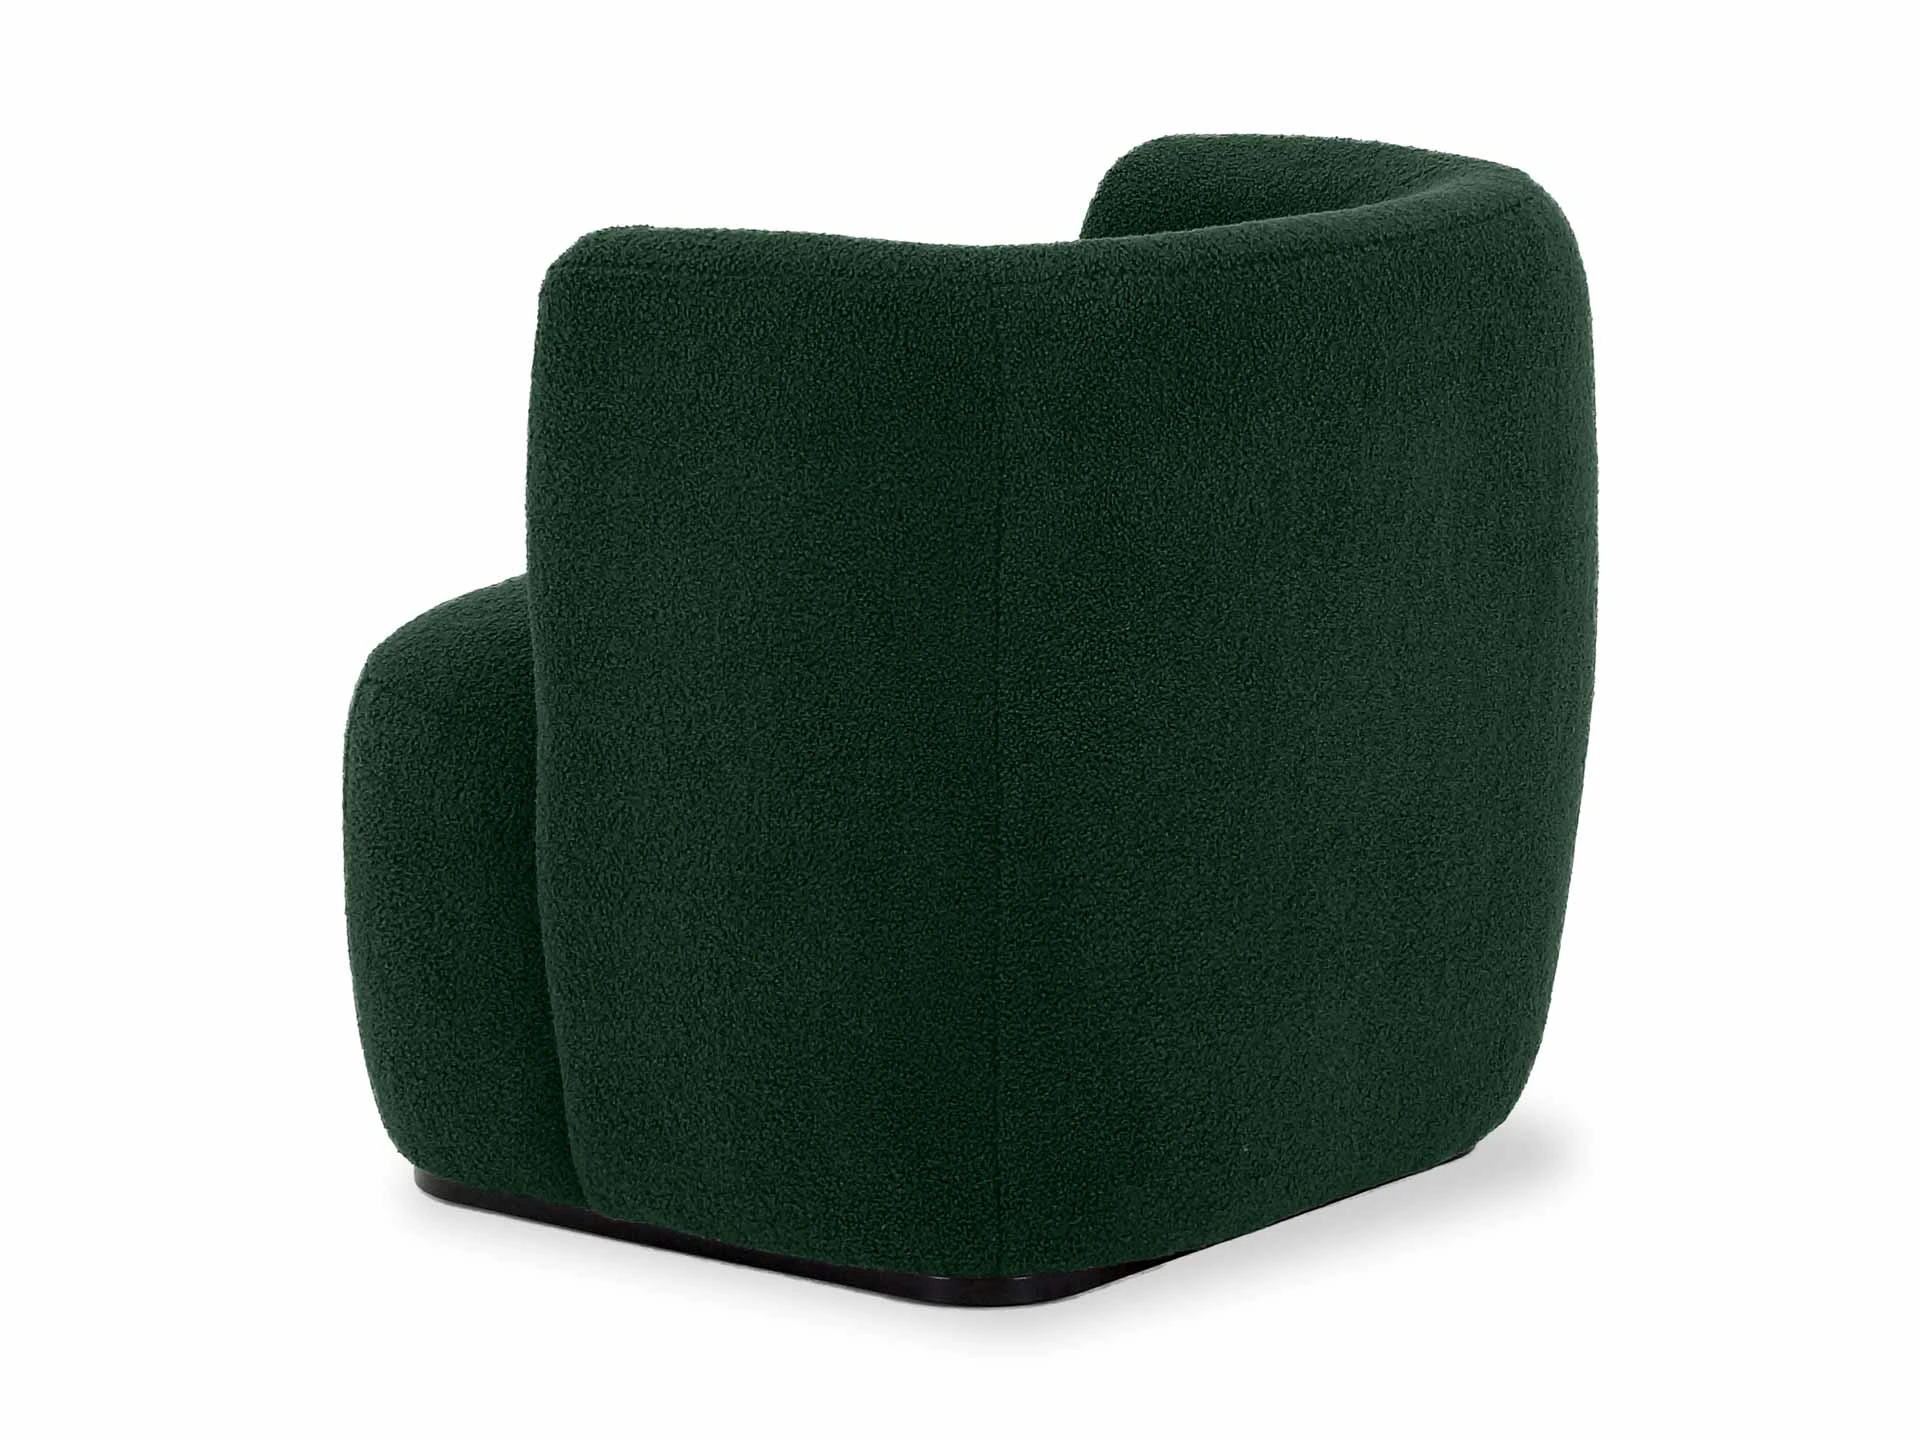 Кресло Livorno букле зеленый 761446